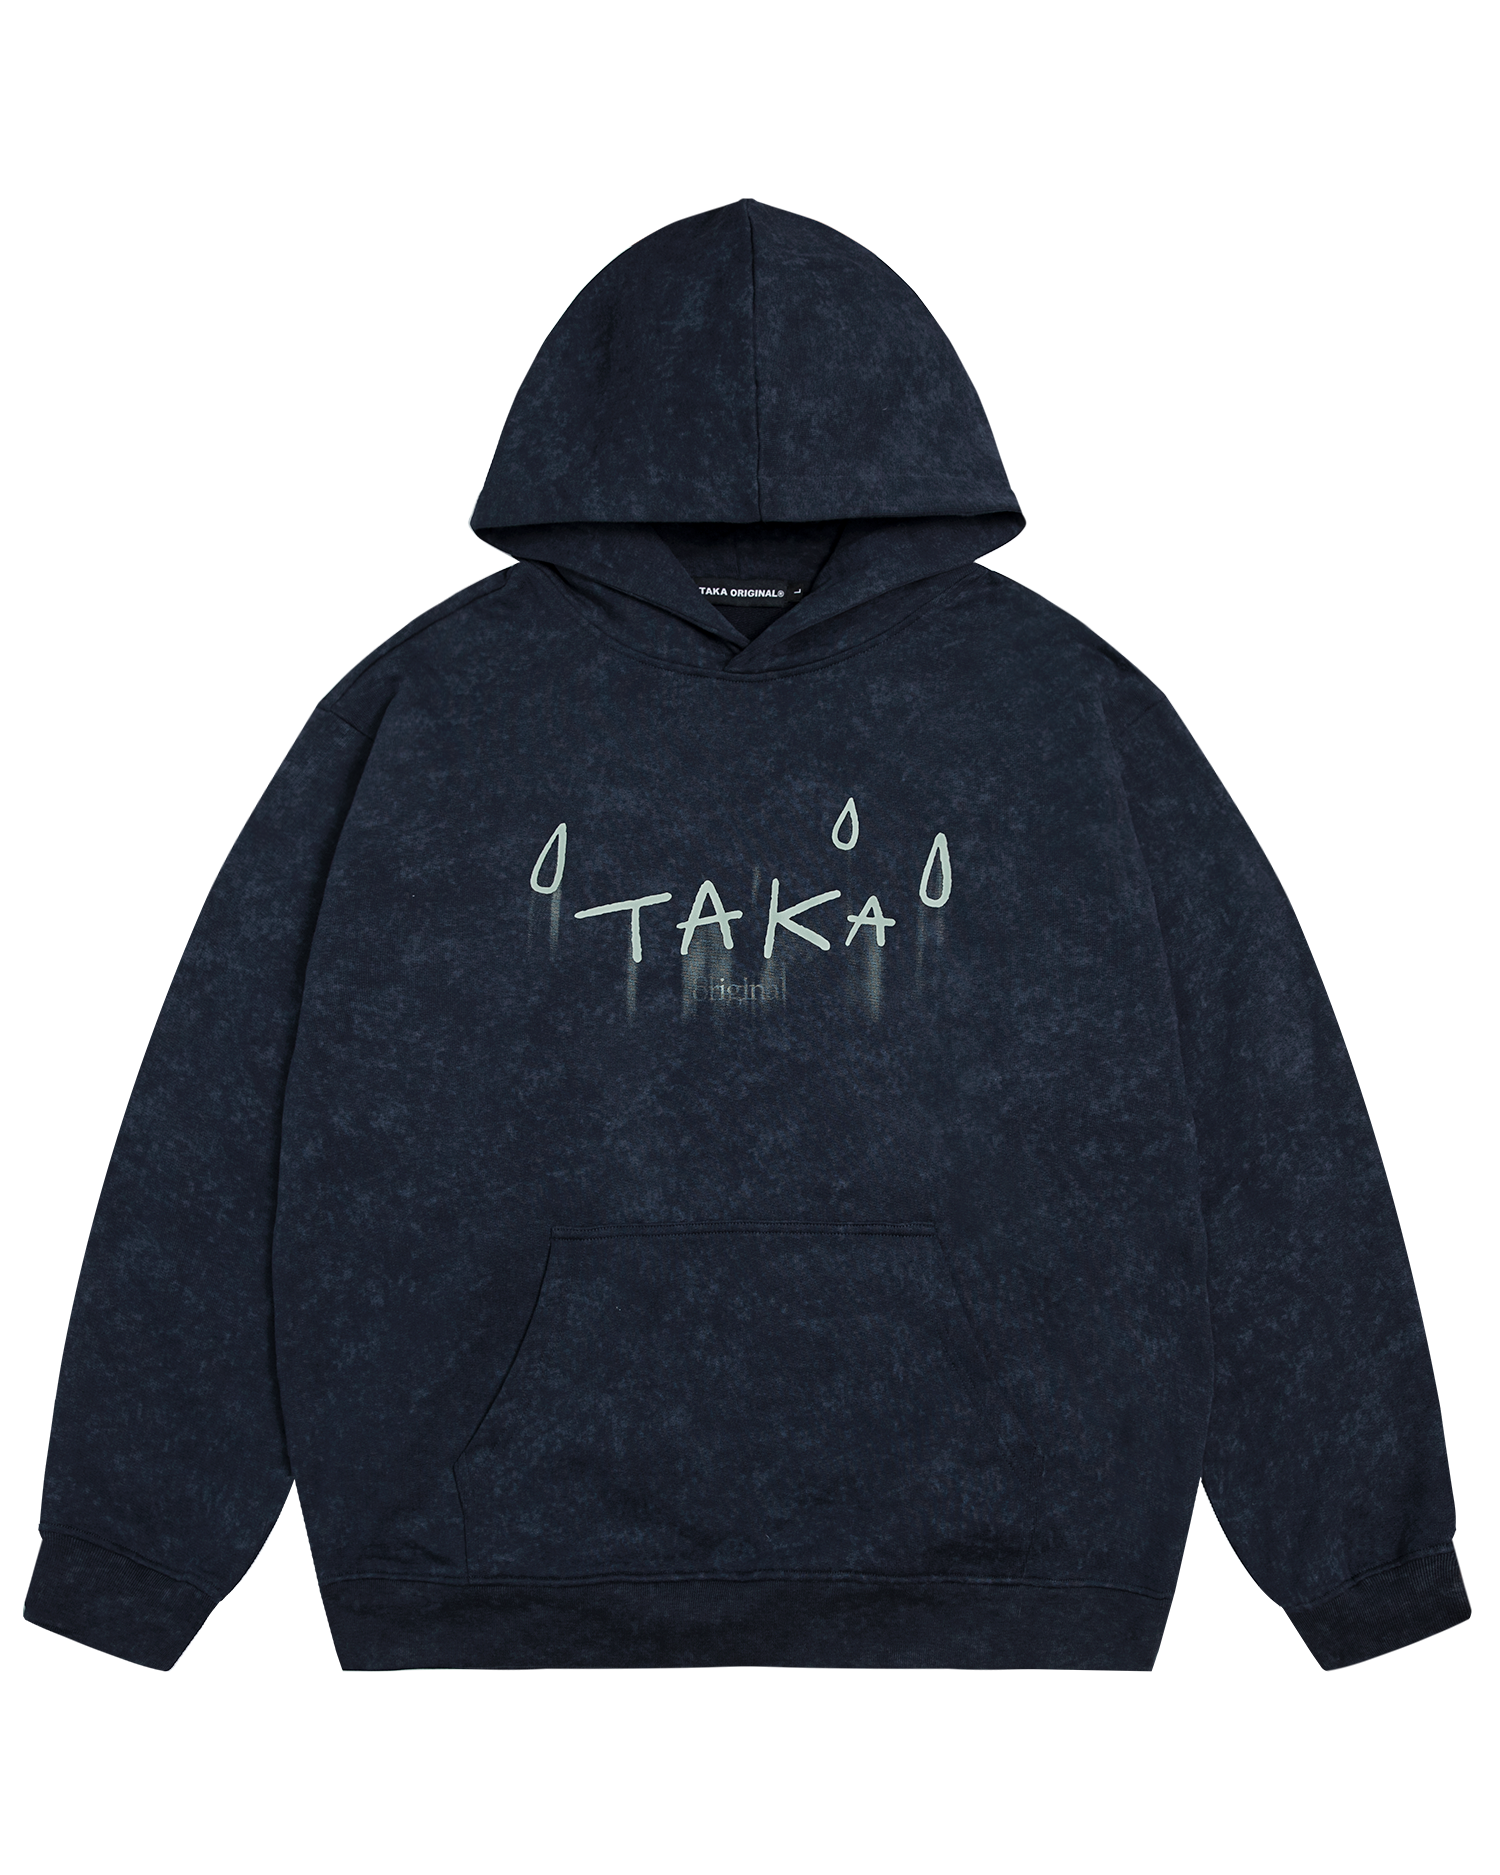 TAKA Original HOME collection raining night daisy hoodie